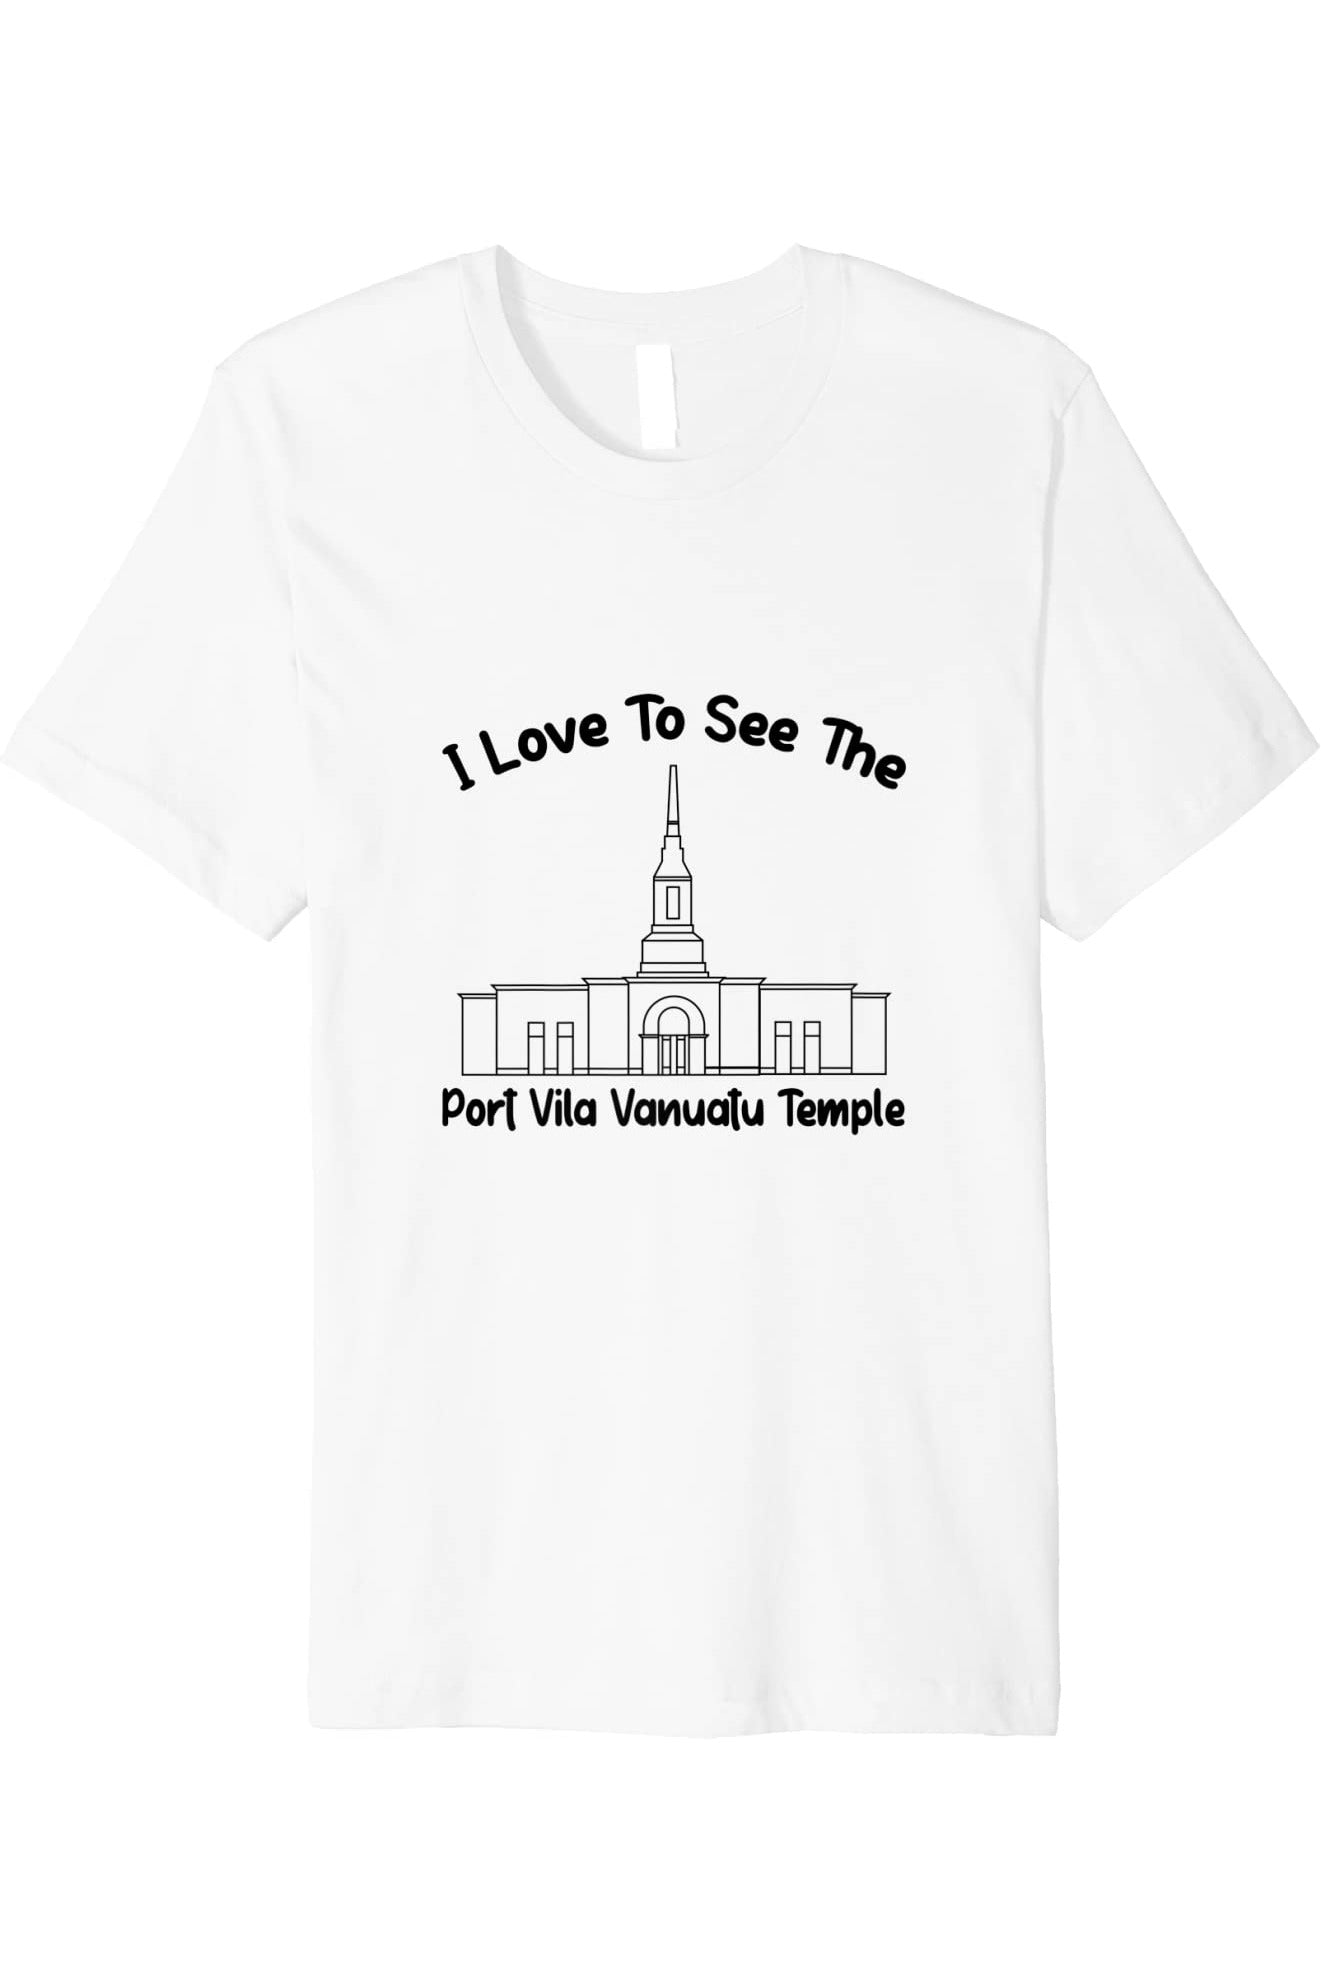 Port Vila Vanuatu Temple T-Shirt - Premium - Primary Style (English) US